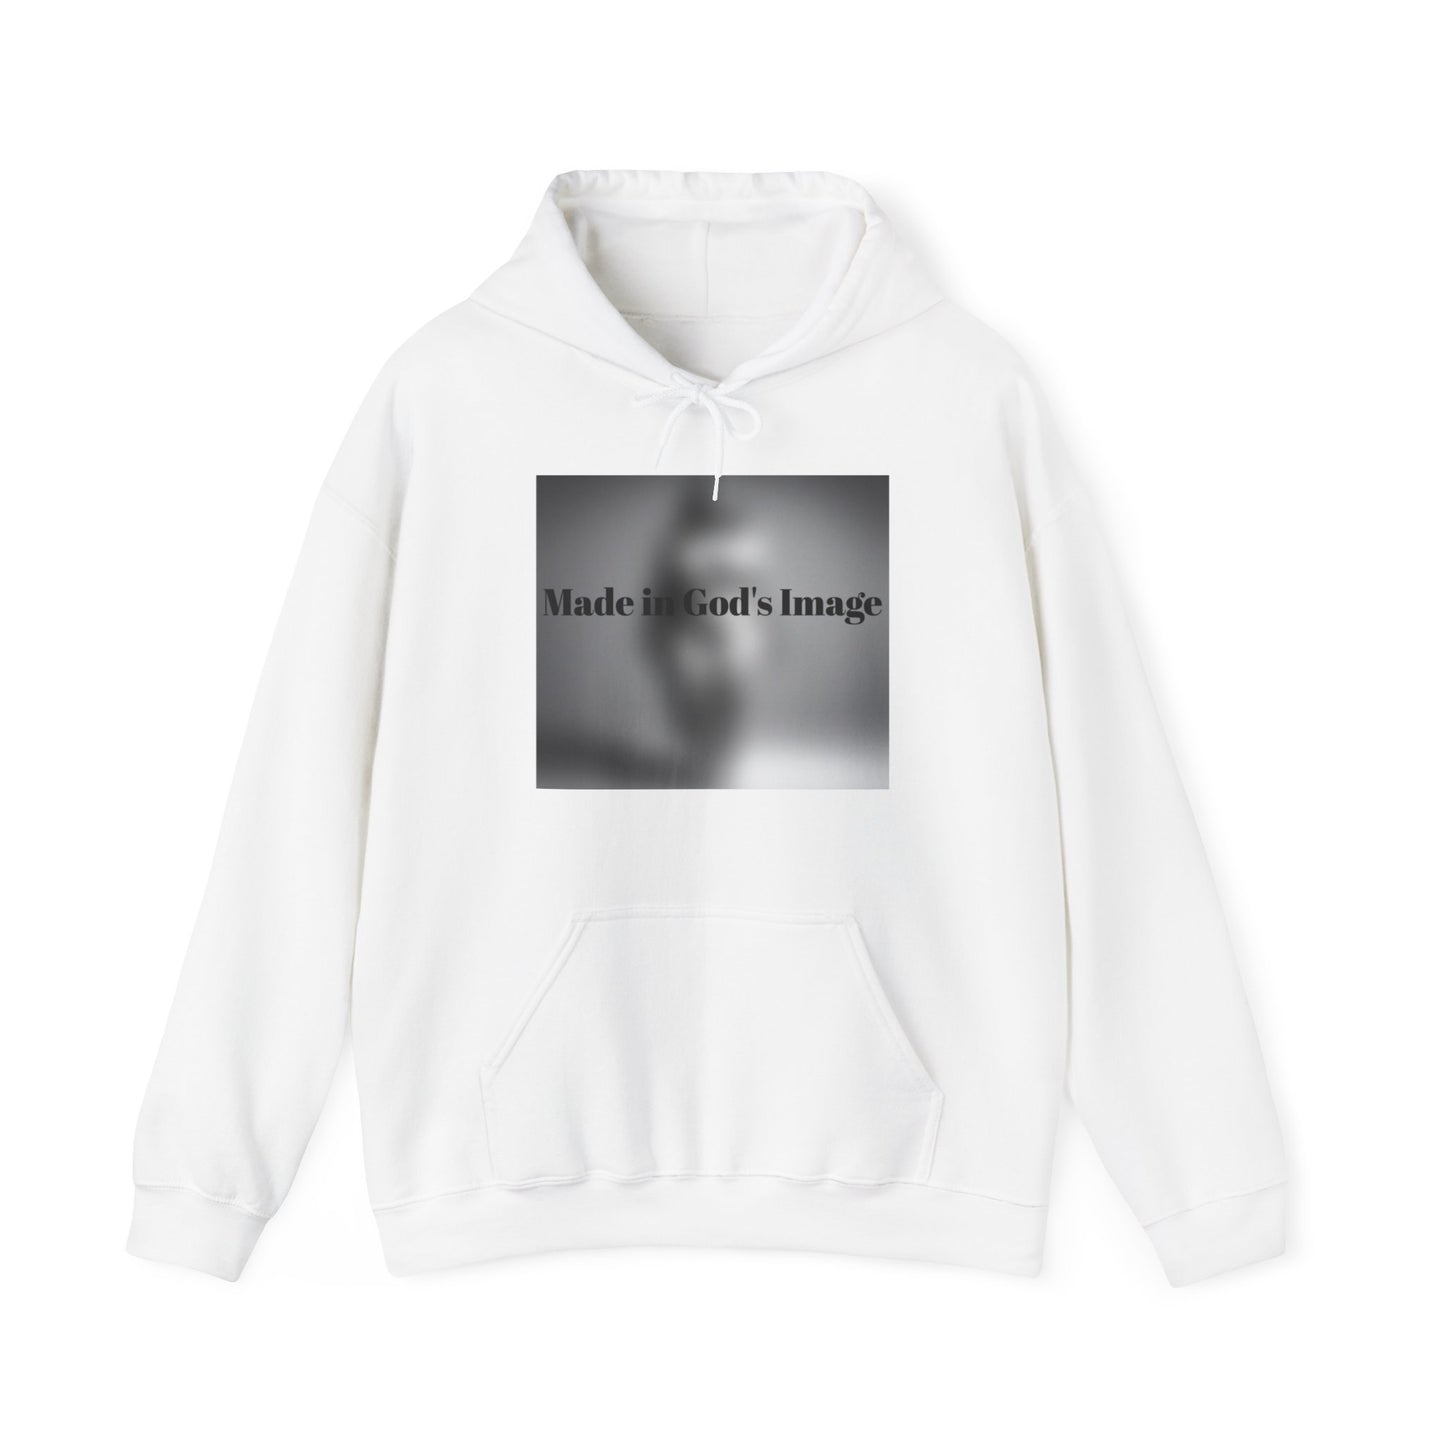 Made in God’s Image Hooded Sweatshirt